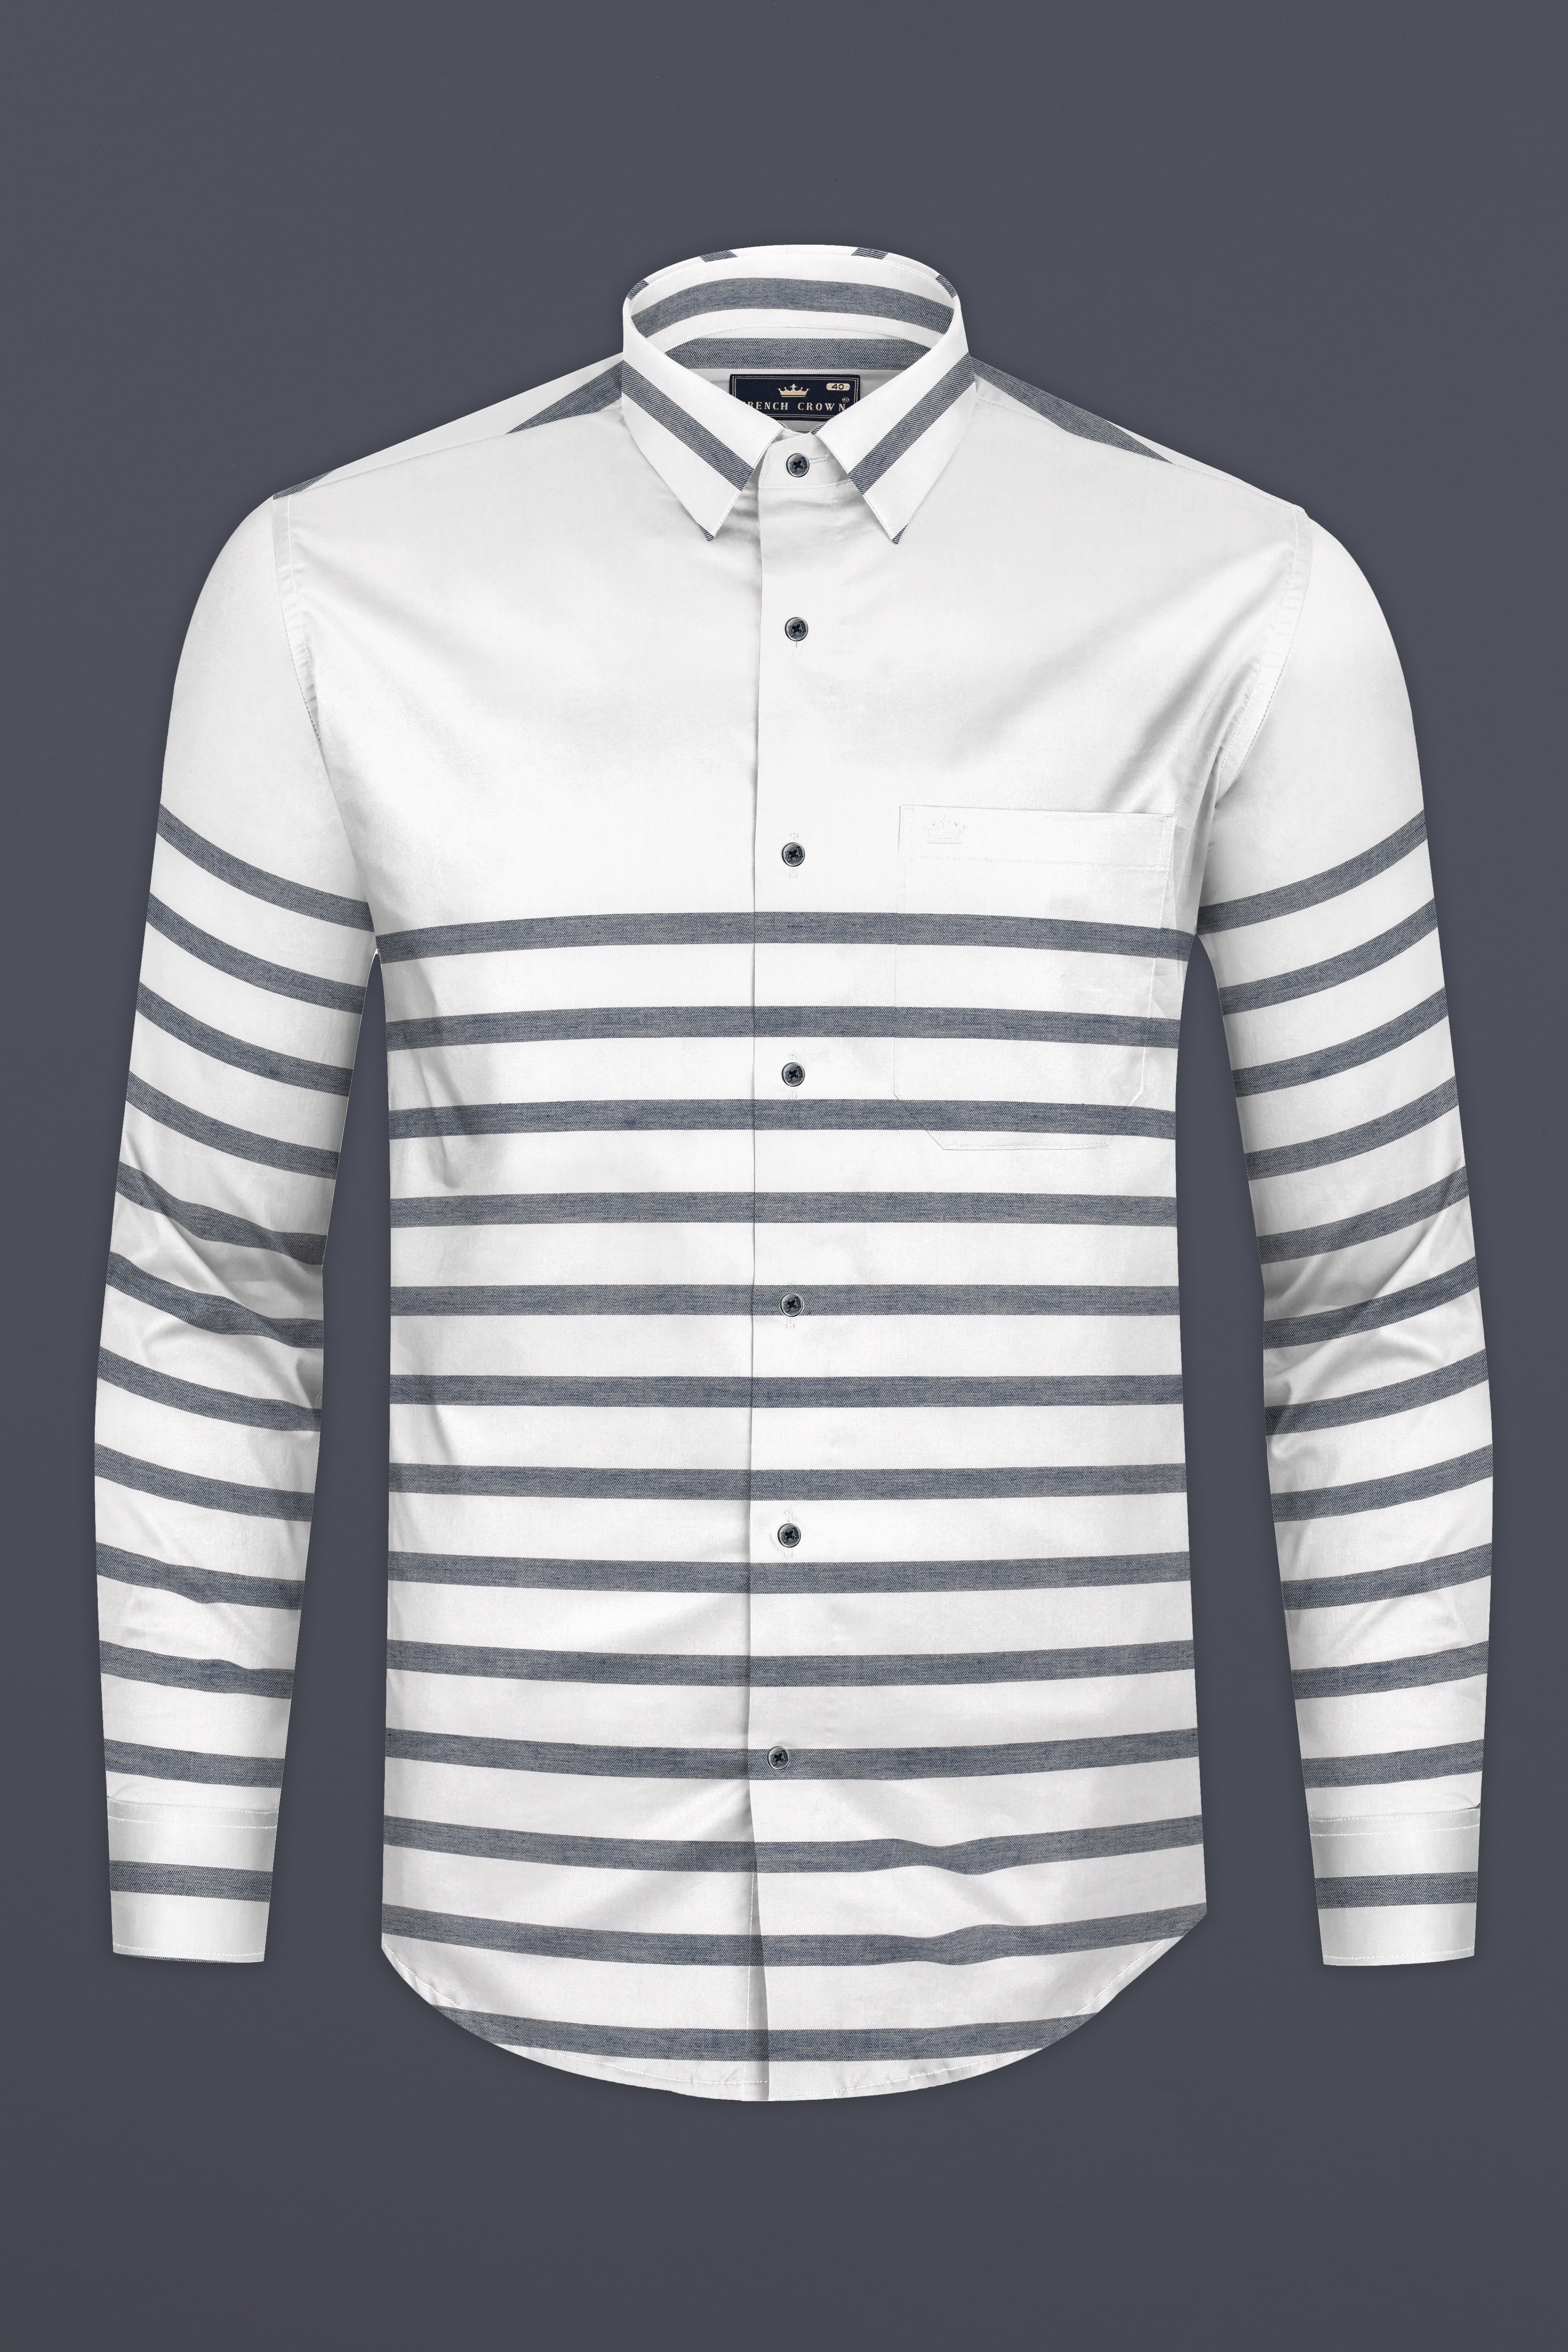 Bright White with Gravel Gray Horizontal Striped Twill Cotton Shirt